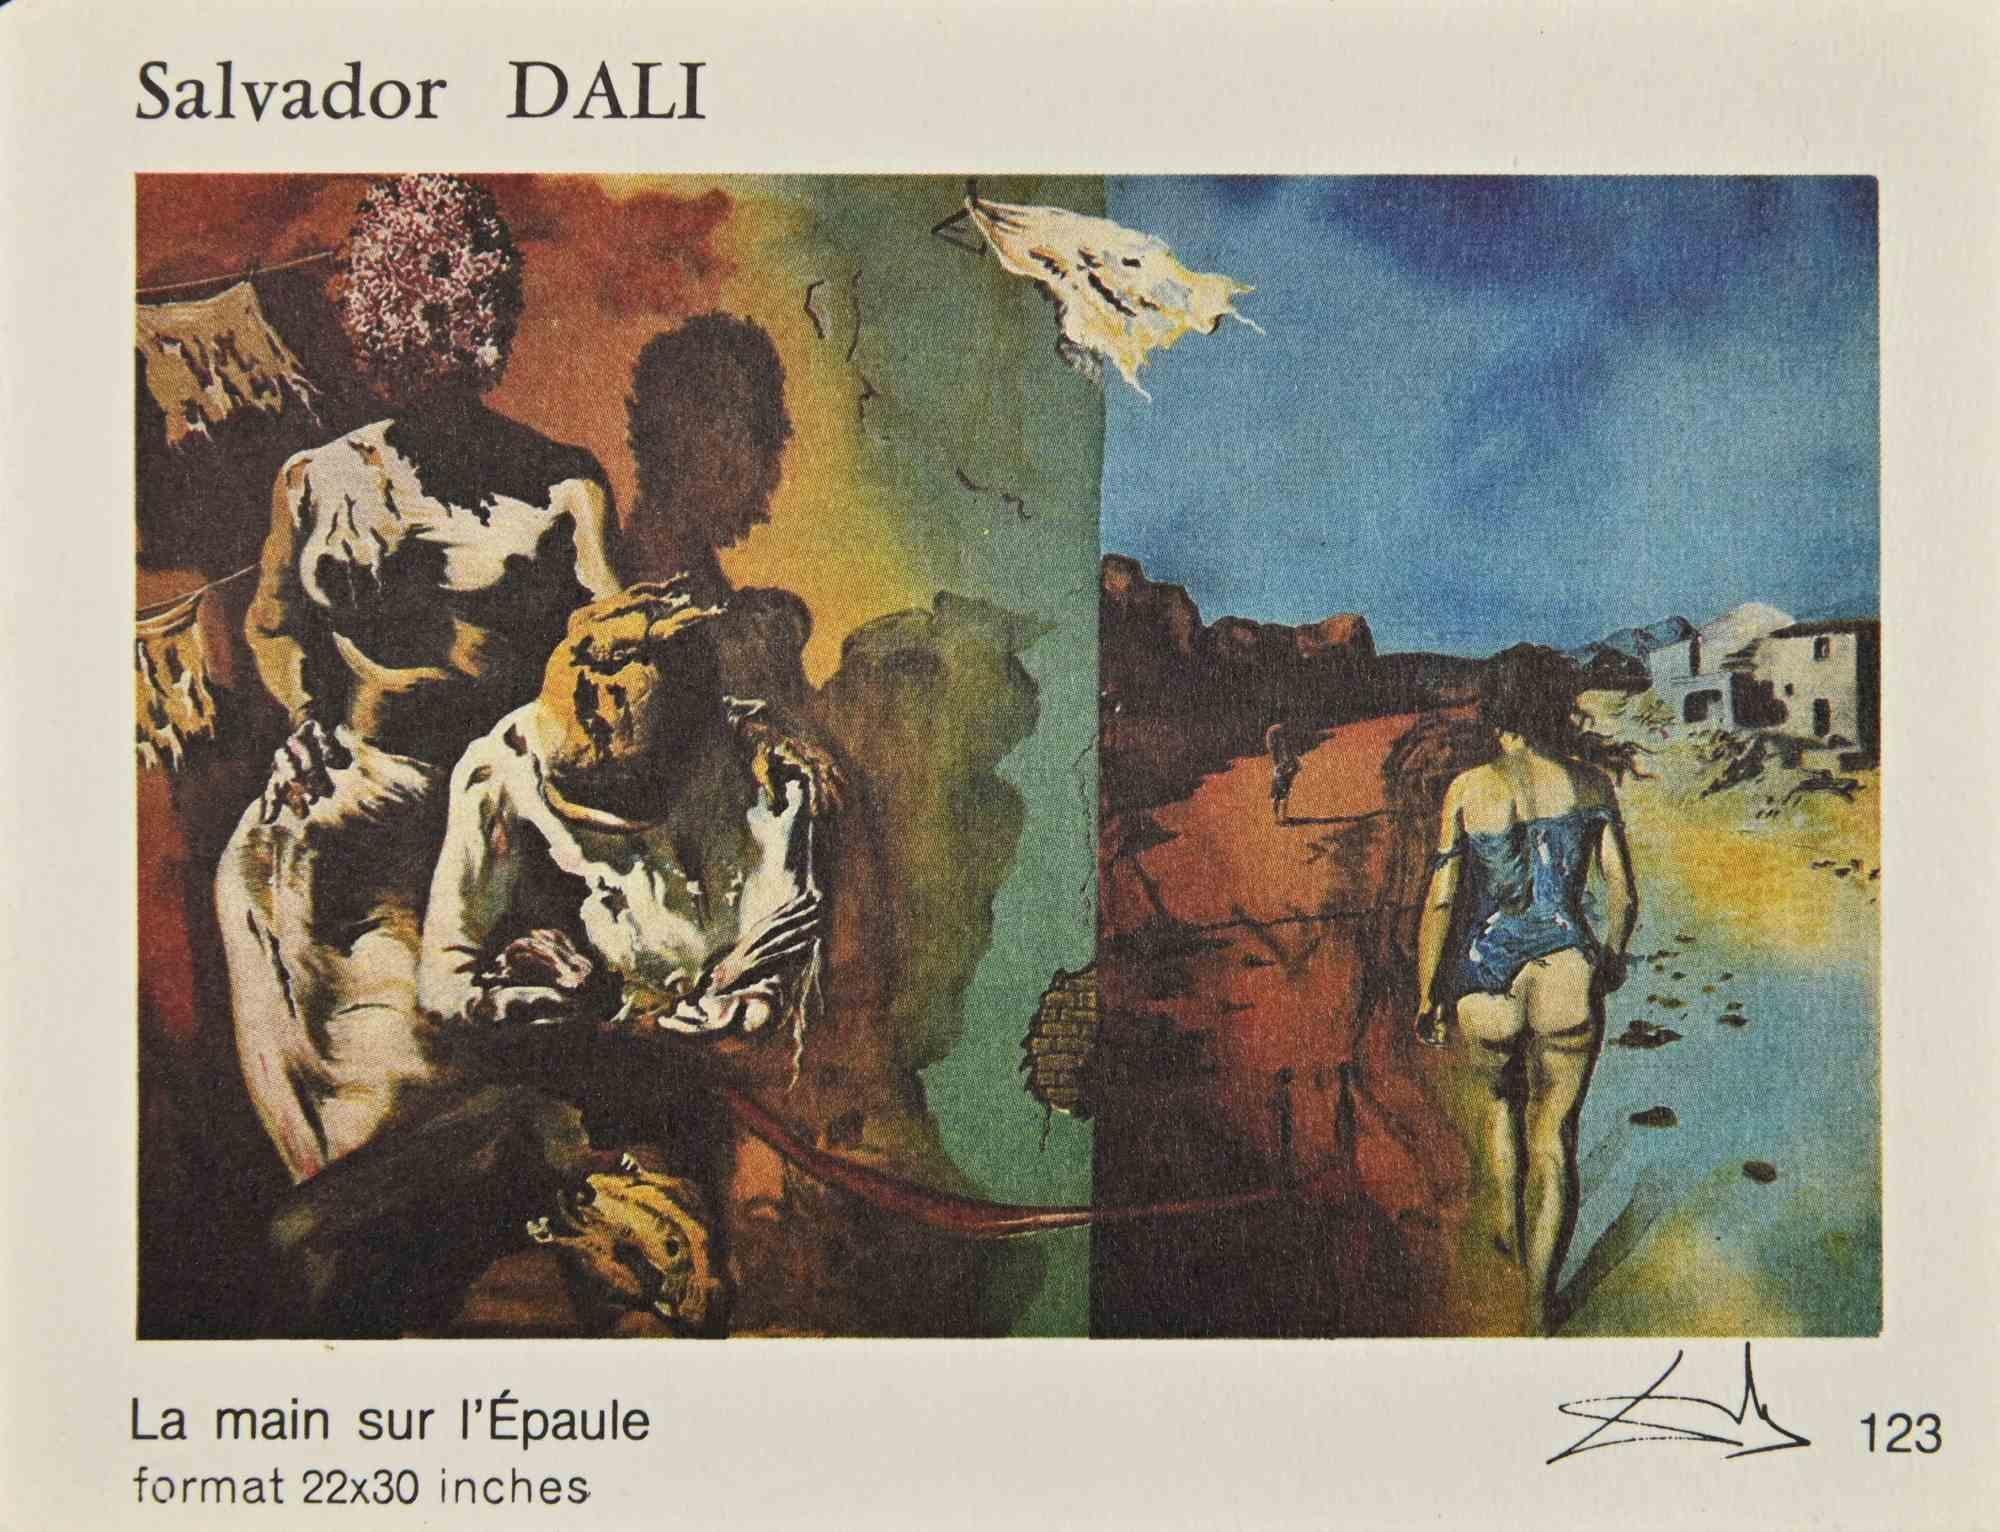 Collection of Vintage Cards After Salvador Dalì - 1980s - Print by Salvador Dalí